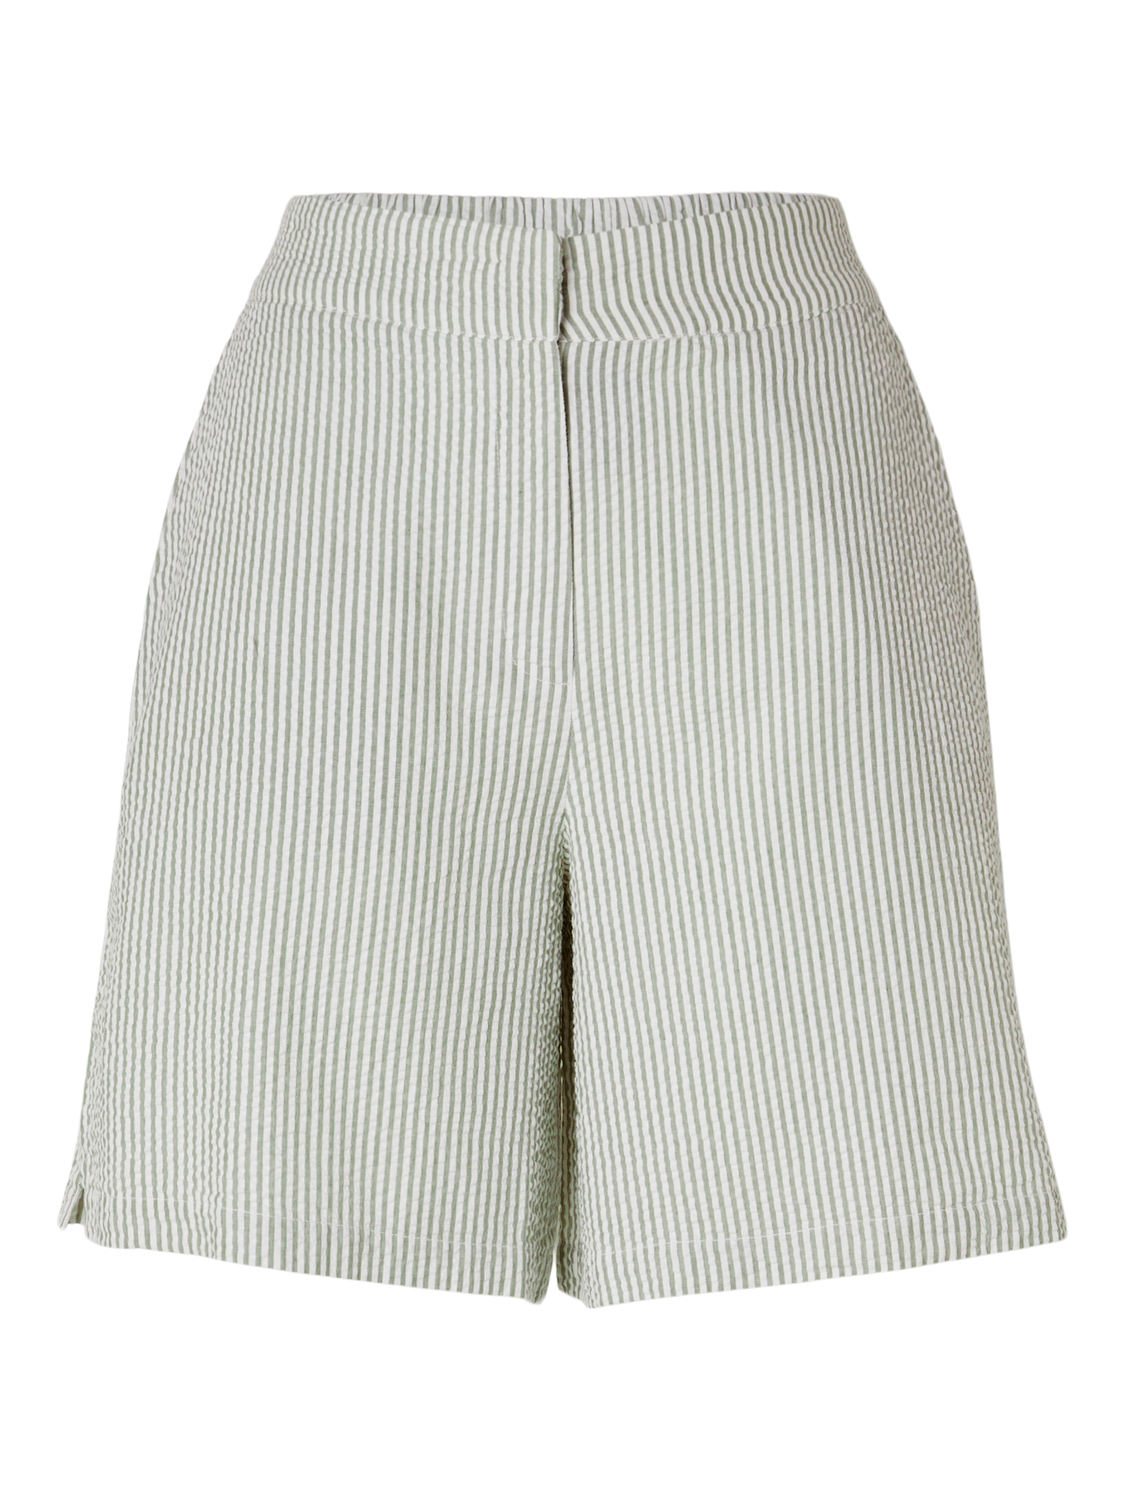 Vittoria Hw Wide Striped Shorts B - Snow White Grey Stripes